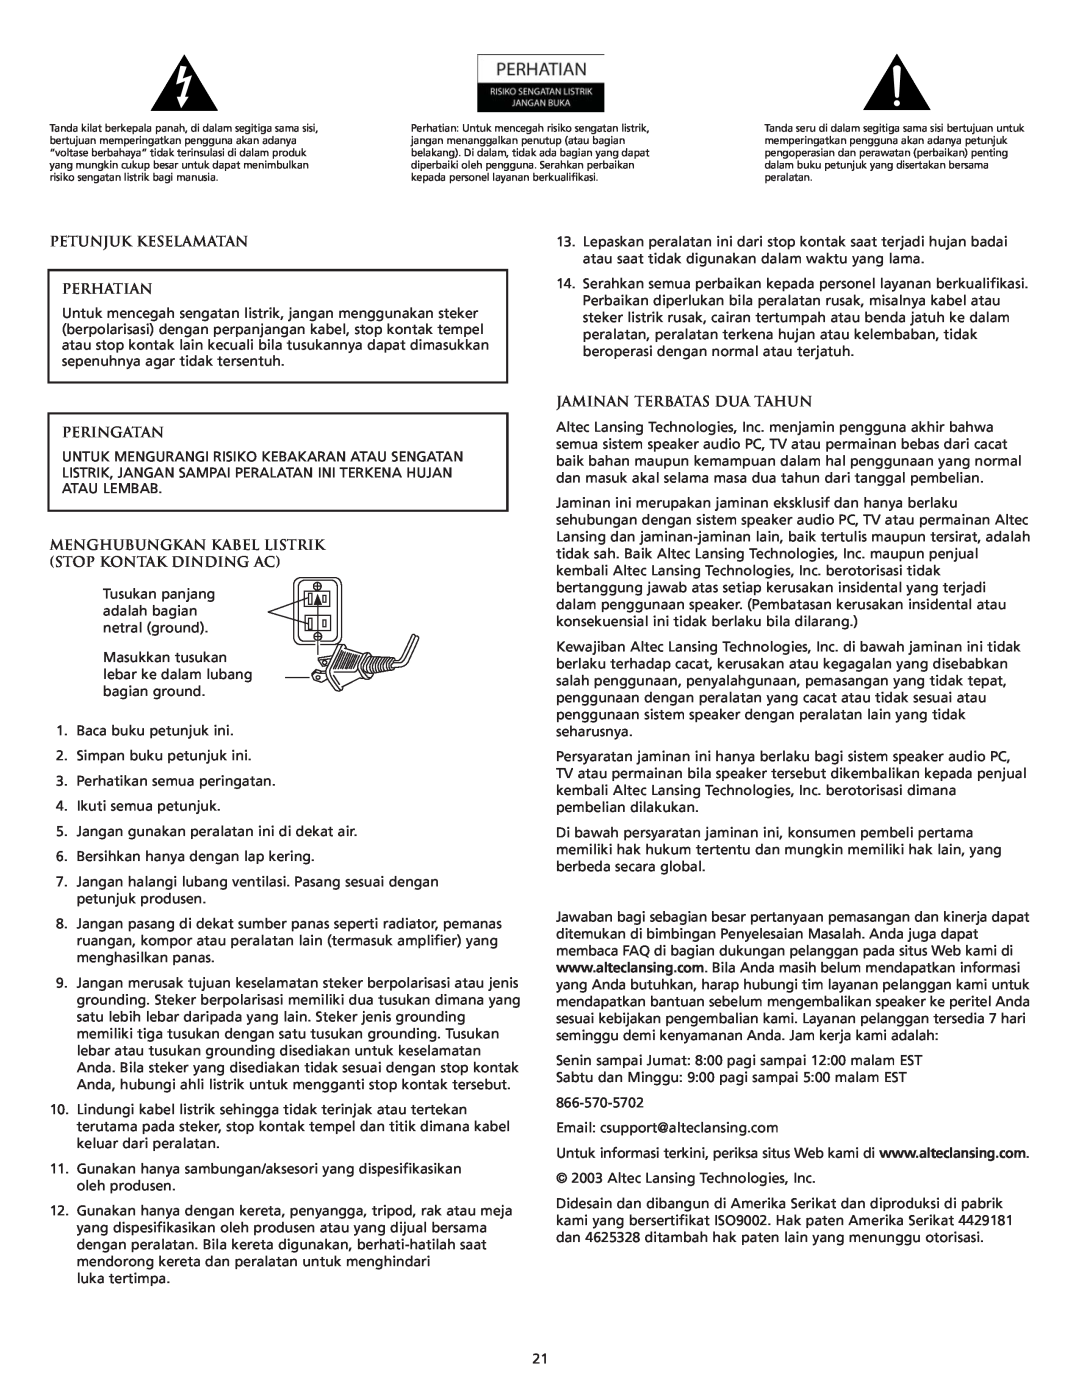 Altec Lansing VS4121 manual Petunjuk Keselamatan Perhatian, Peringatan, Jaminan Terbatas Dua Tahun 